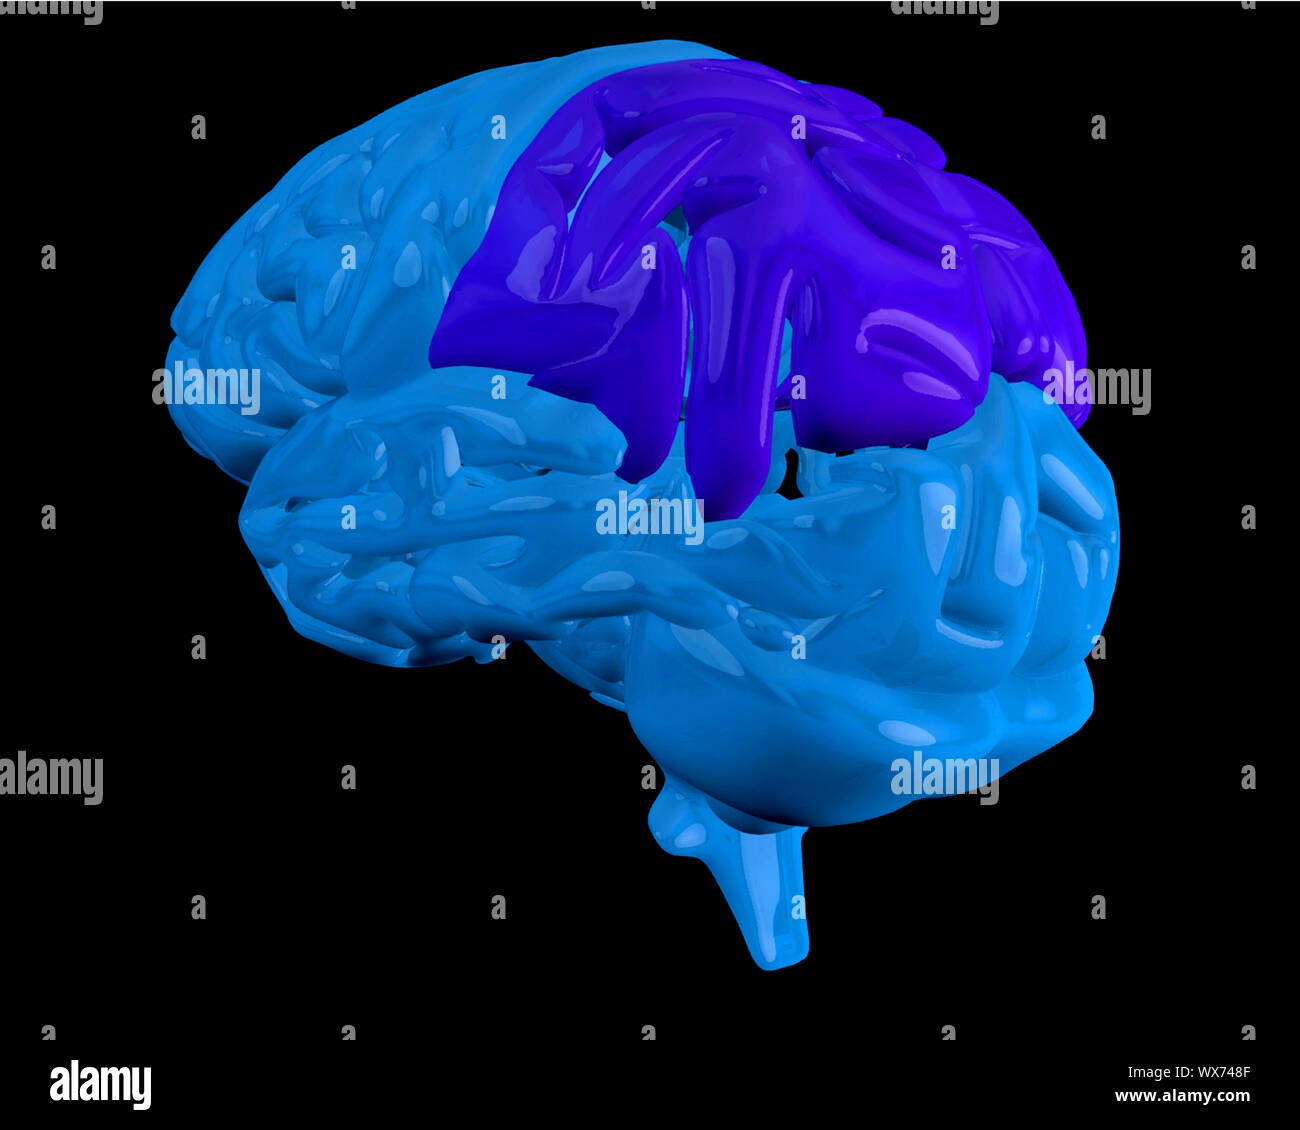 Blue brain with highlighted dark blue parietal lobe on black background Stock Photo